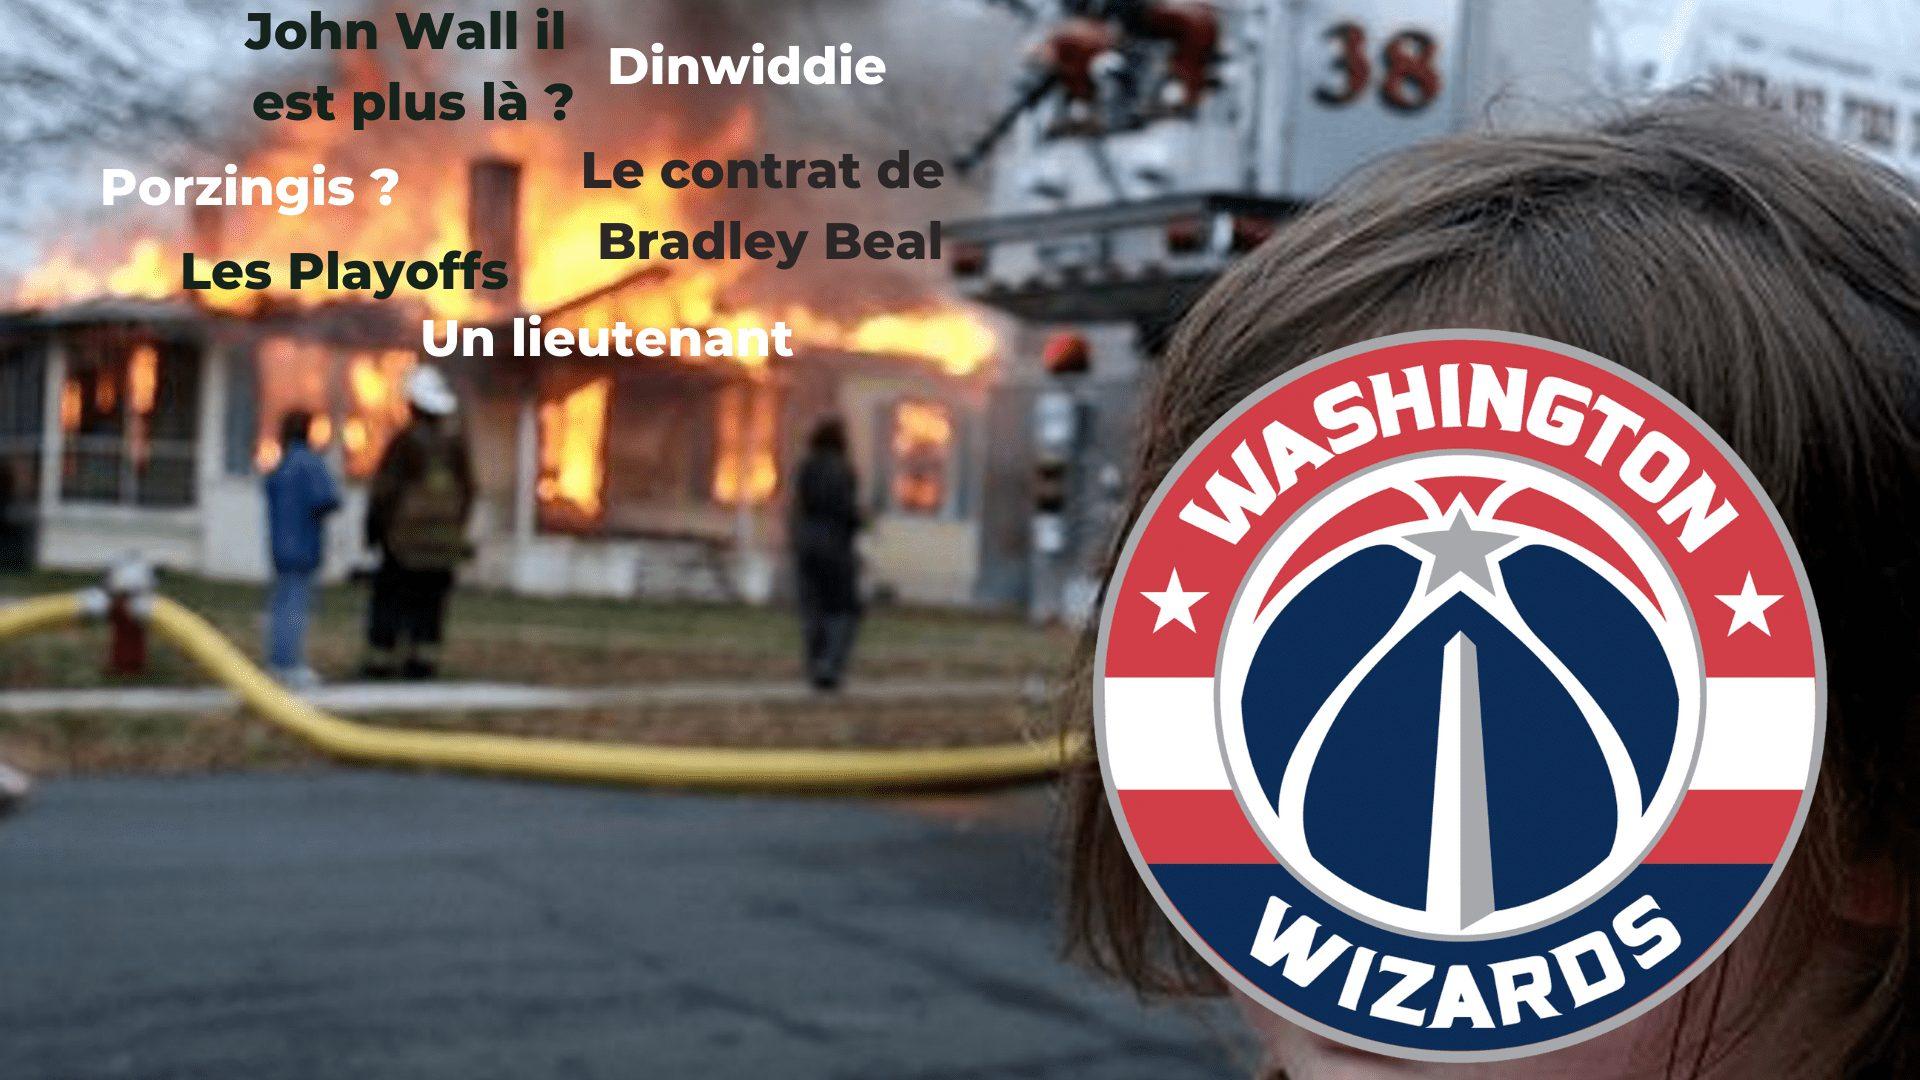 Bilan Washington Wizards 2021-22